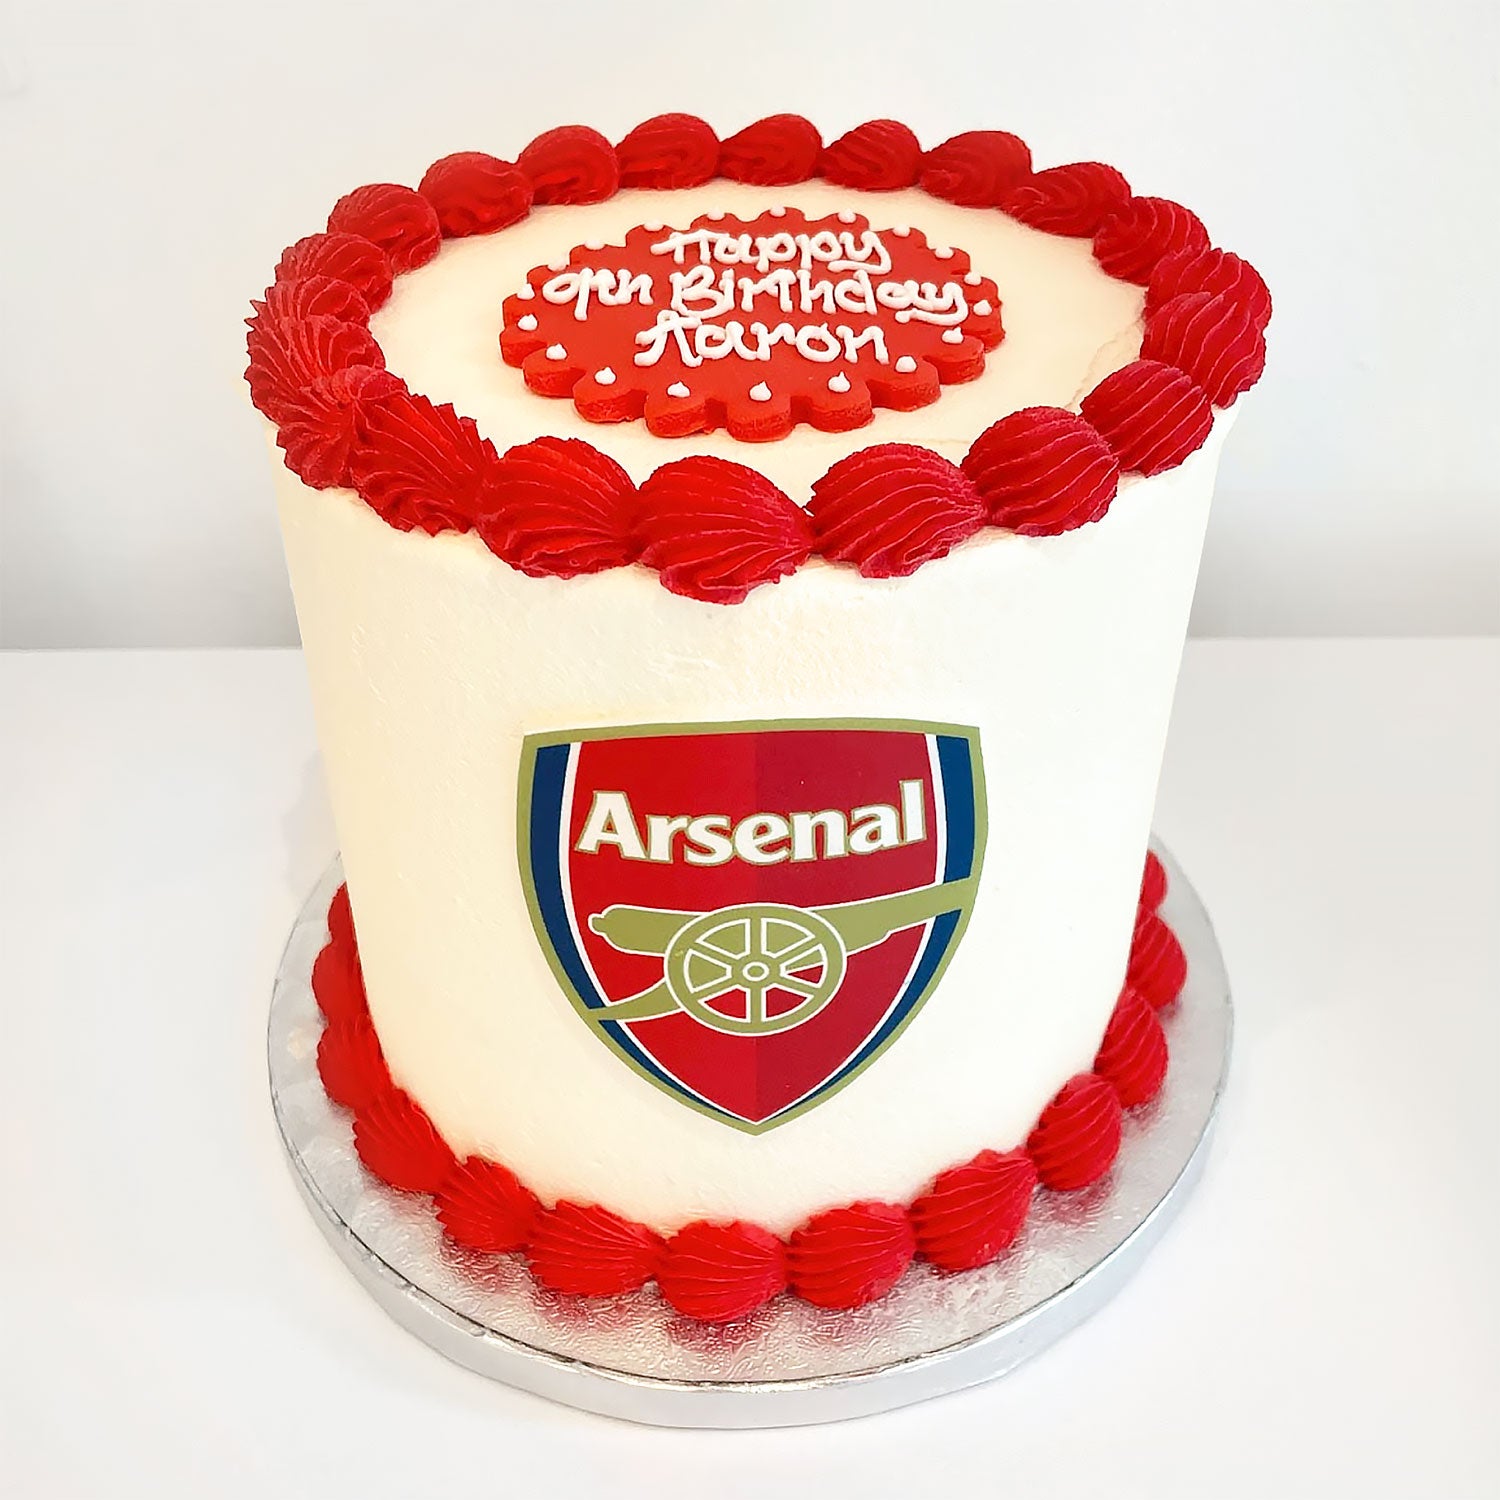 Football / Arsenal cake – CakeObsession